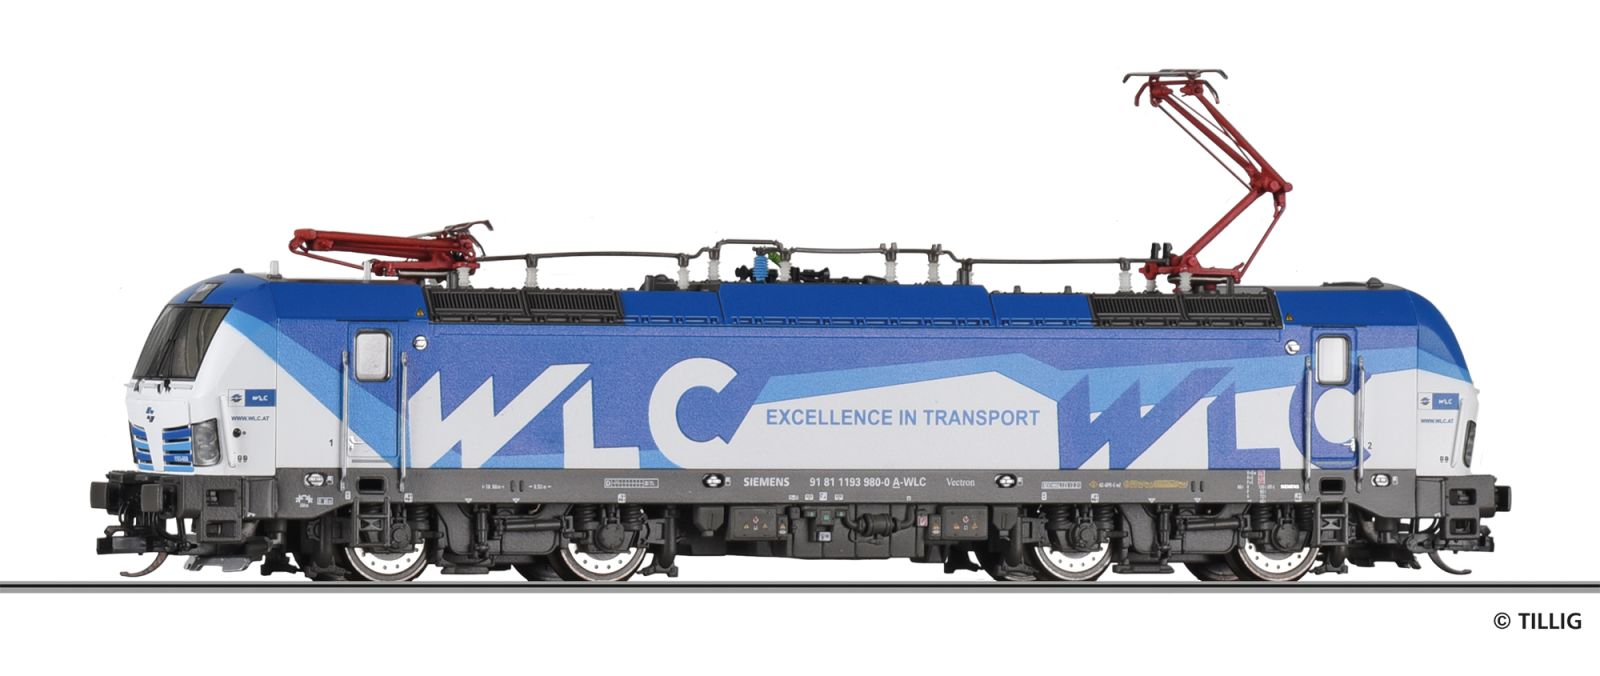 Electric locomotive Wiener Lokalbahnen Cargo GmbH